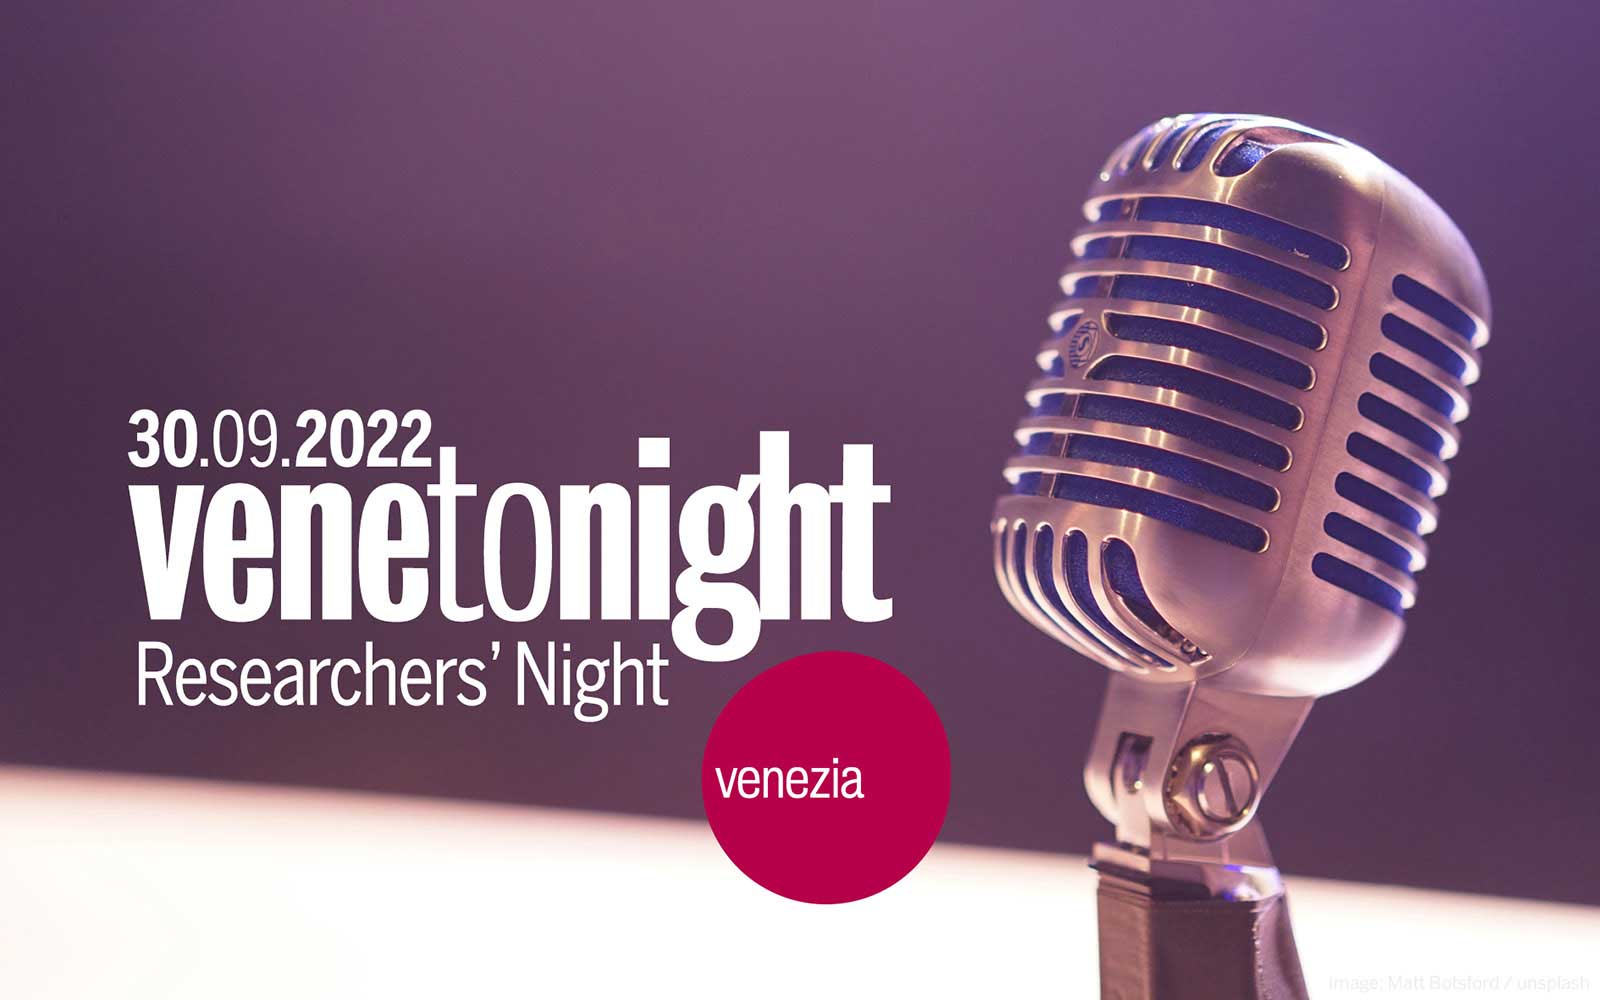 30/09/2022 Venetonight, Researchrs' Night Venezia